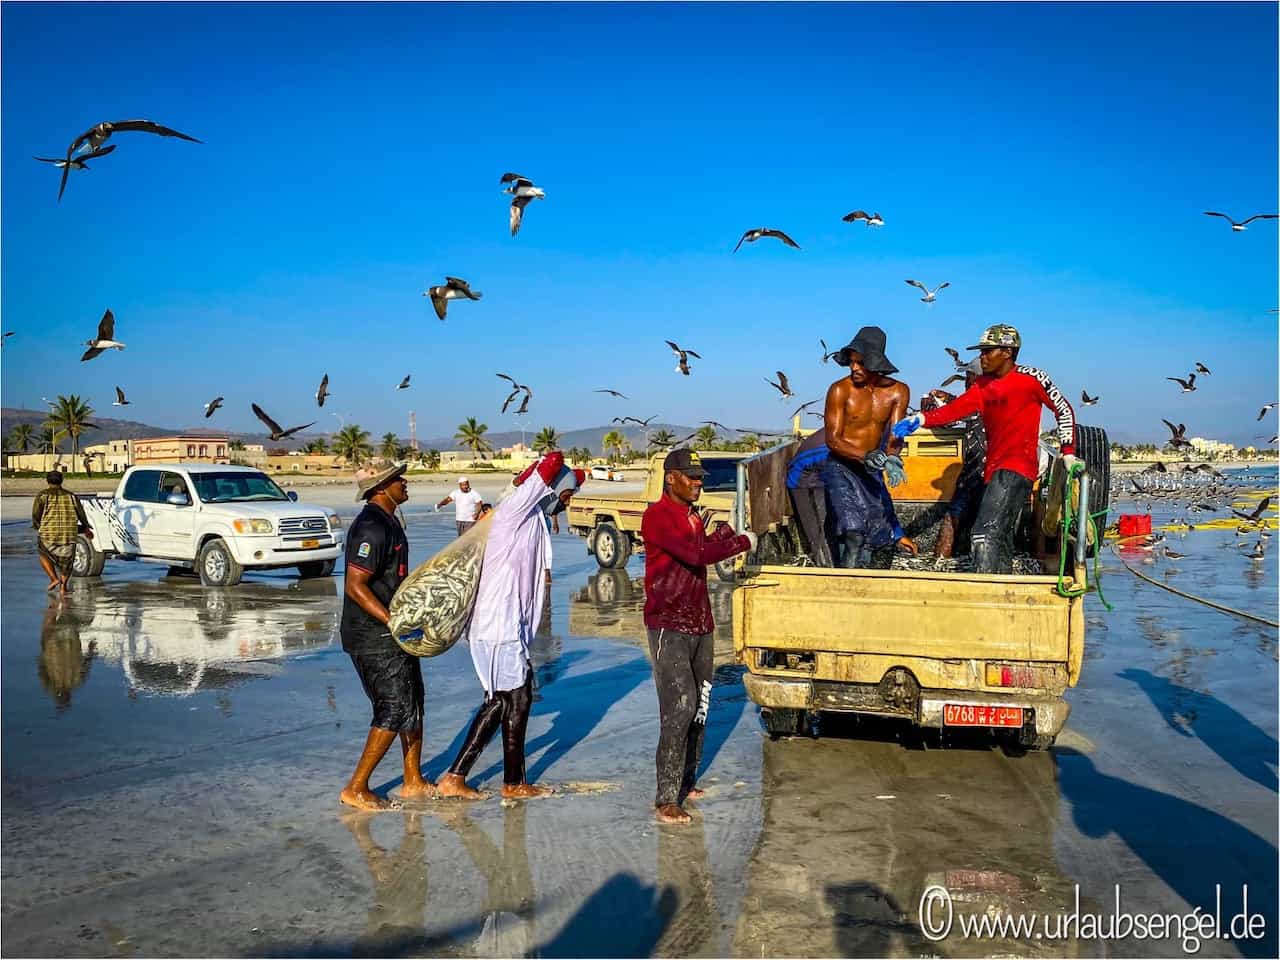 Sardinenfischer am Strand in Taqa / Salalah